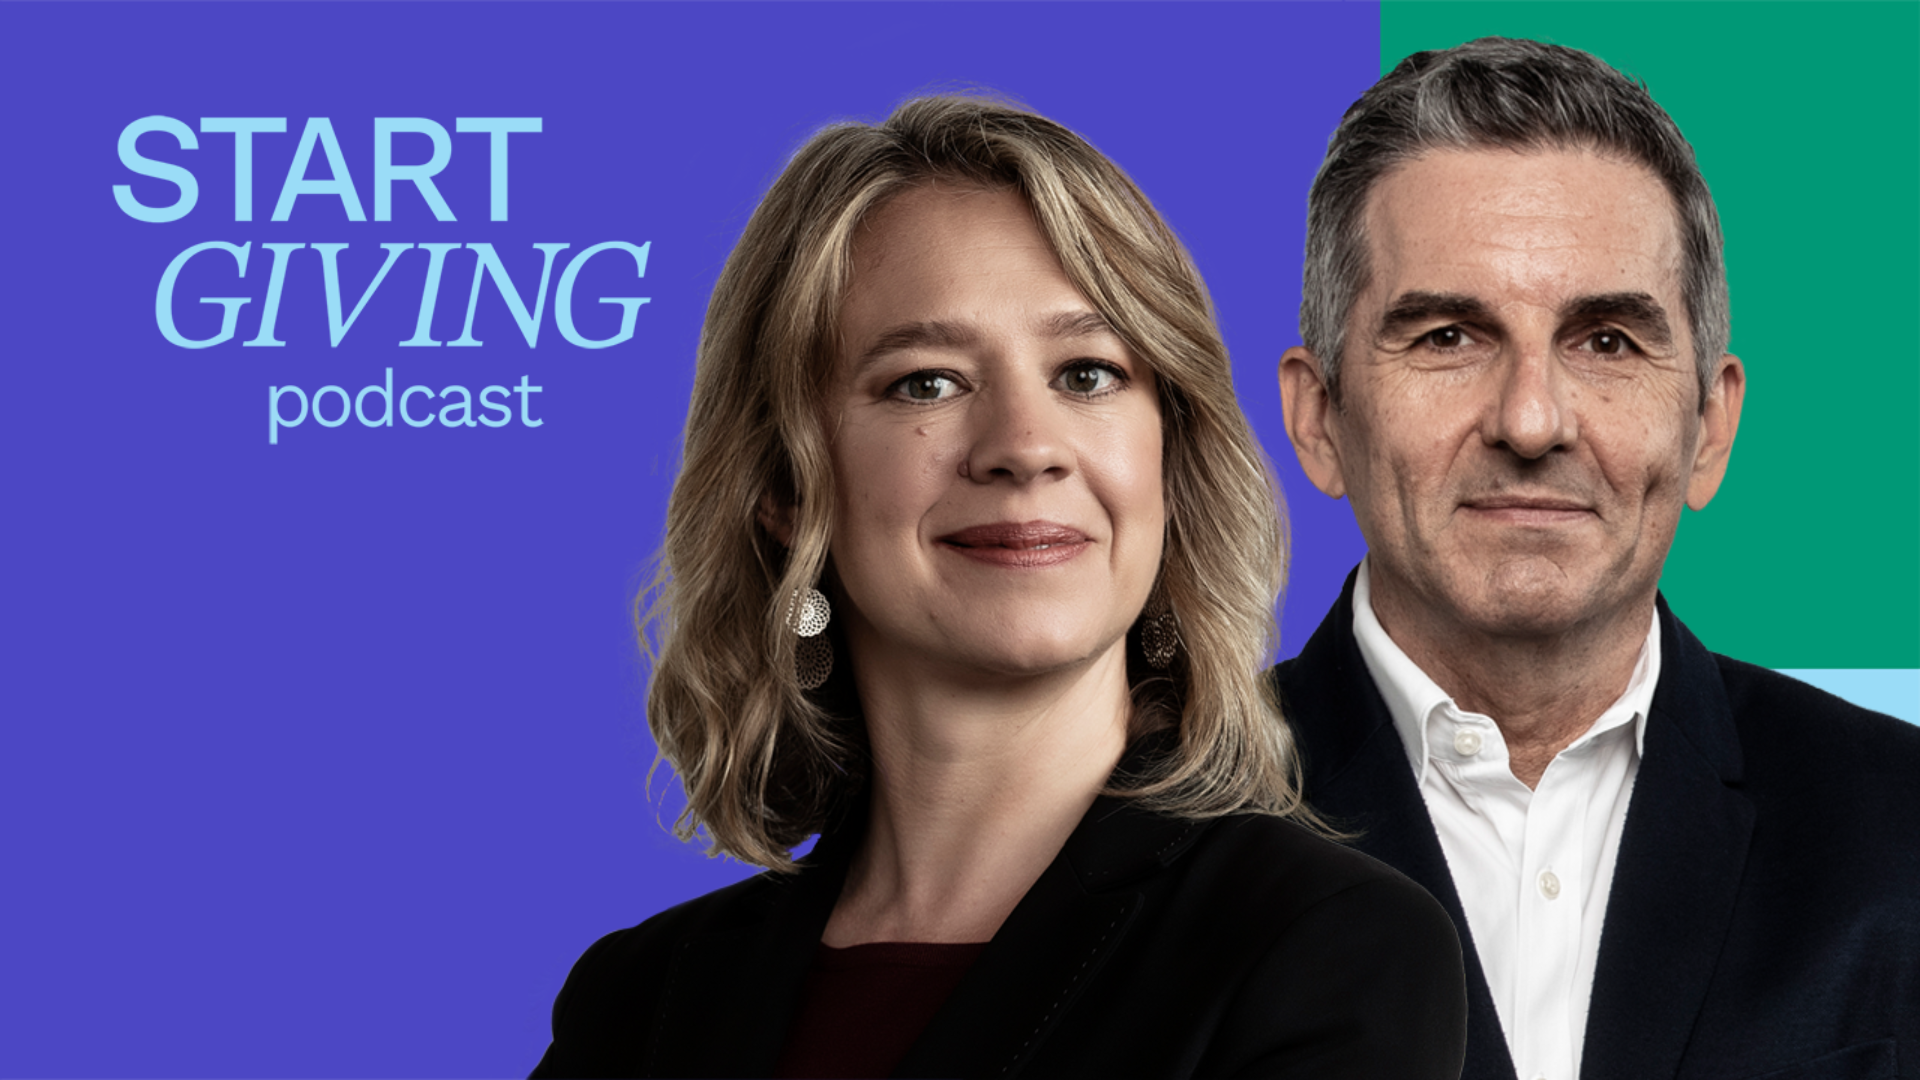 Daniel Petre and Antonia Ruffell - StartGiving podcast